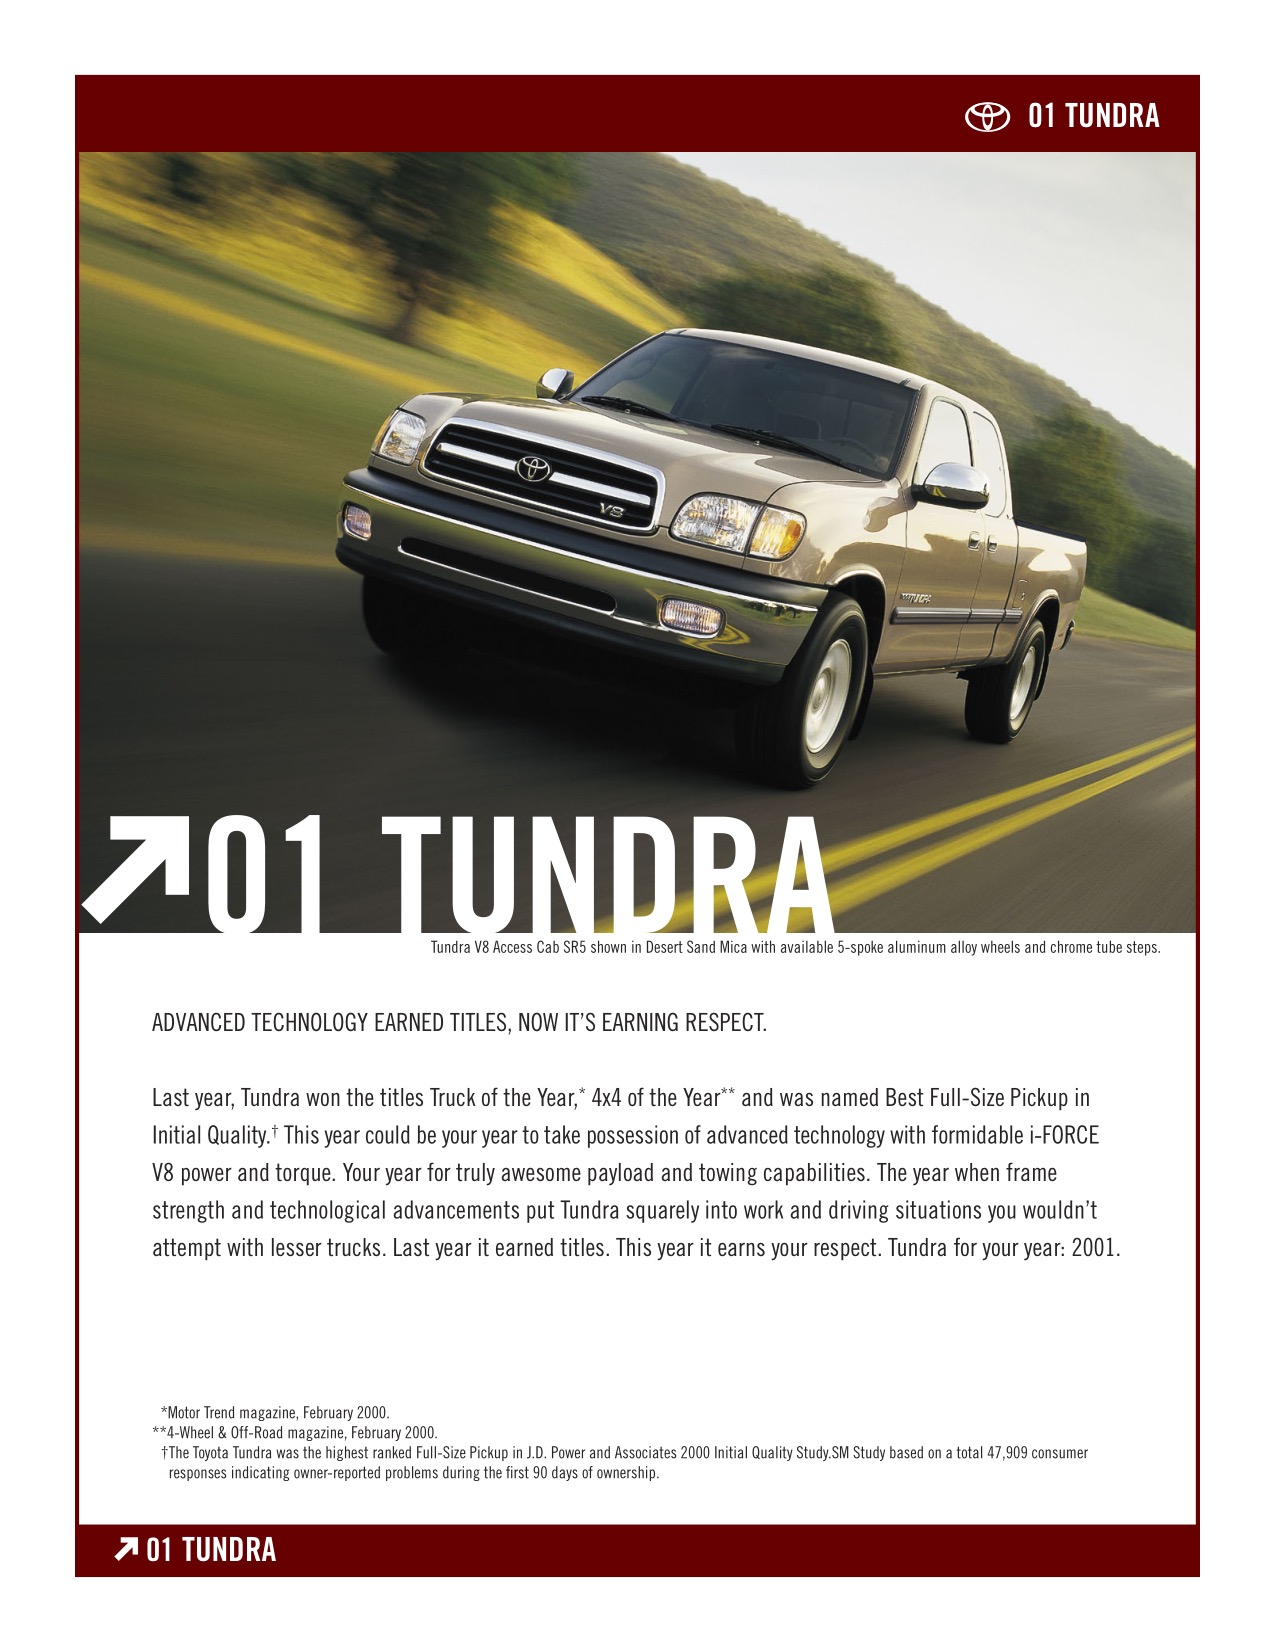 2001 Toyota Tundra Brochure Page 1